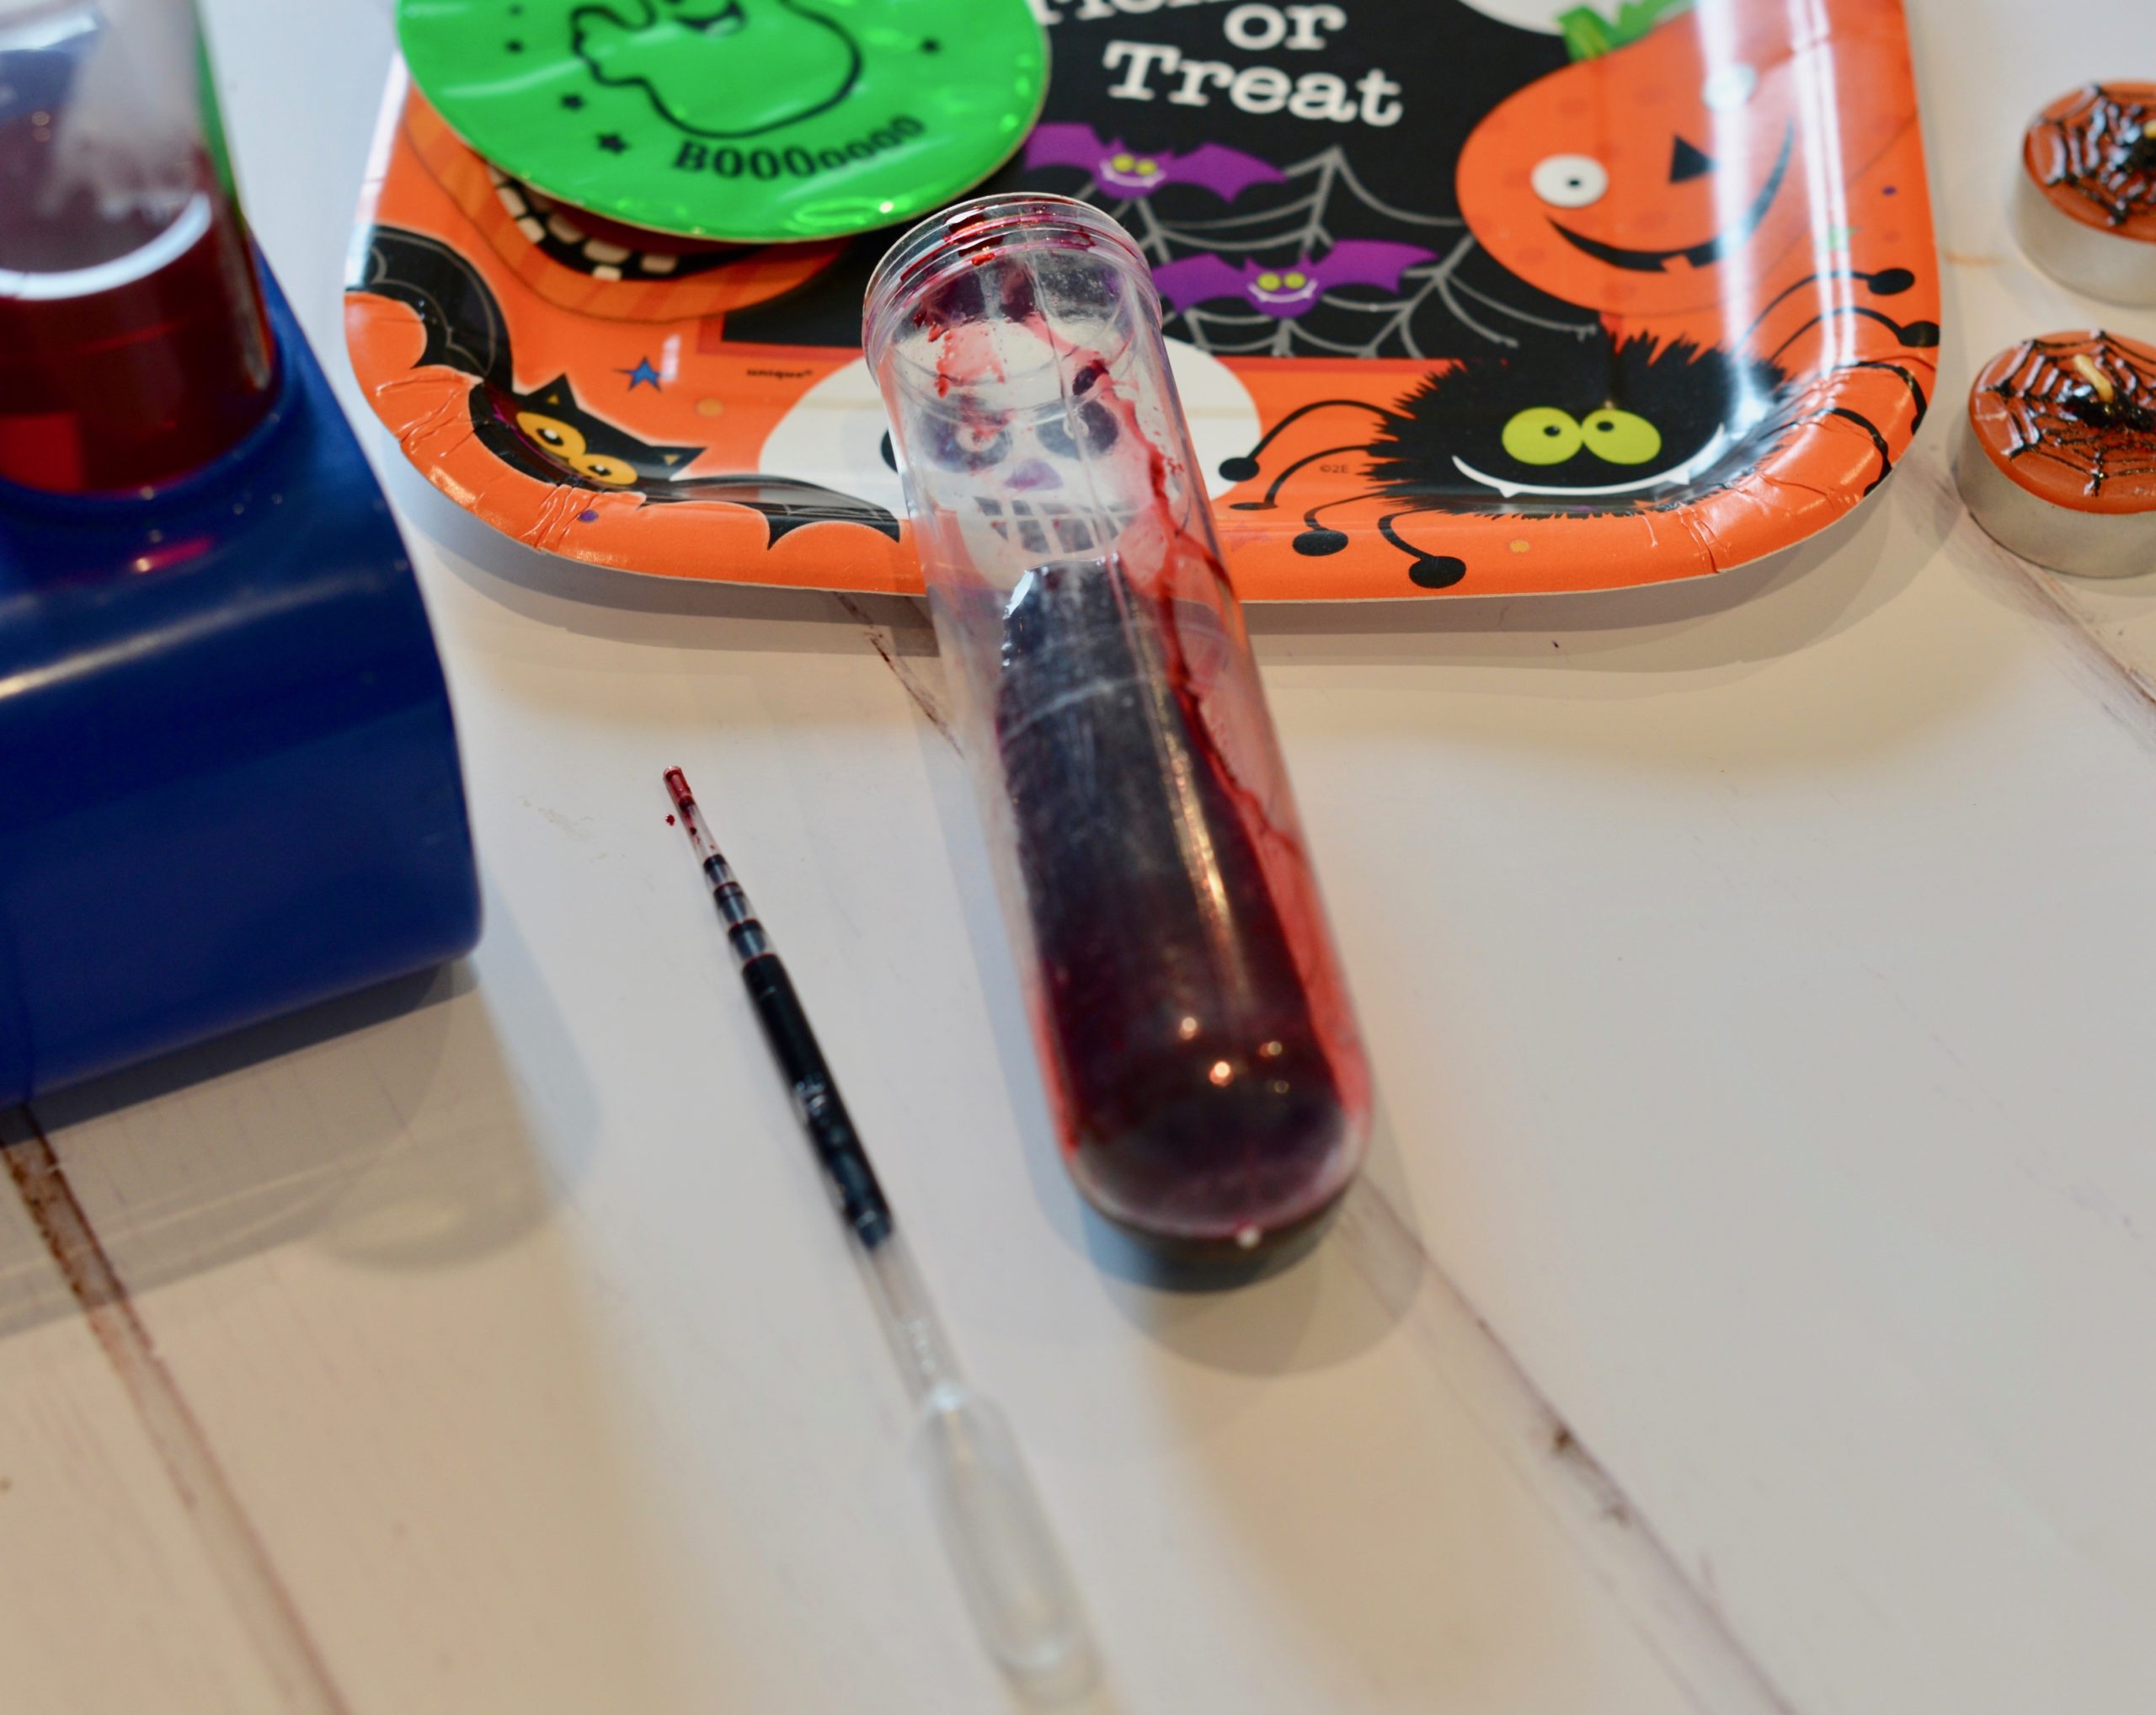 How to make fake blood - Gathered